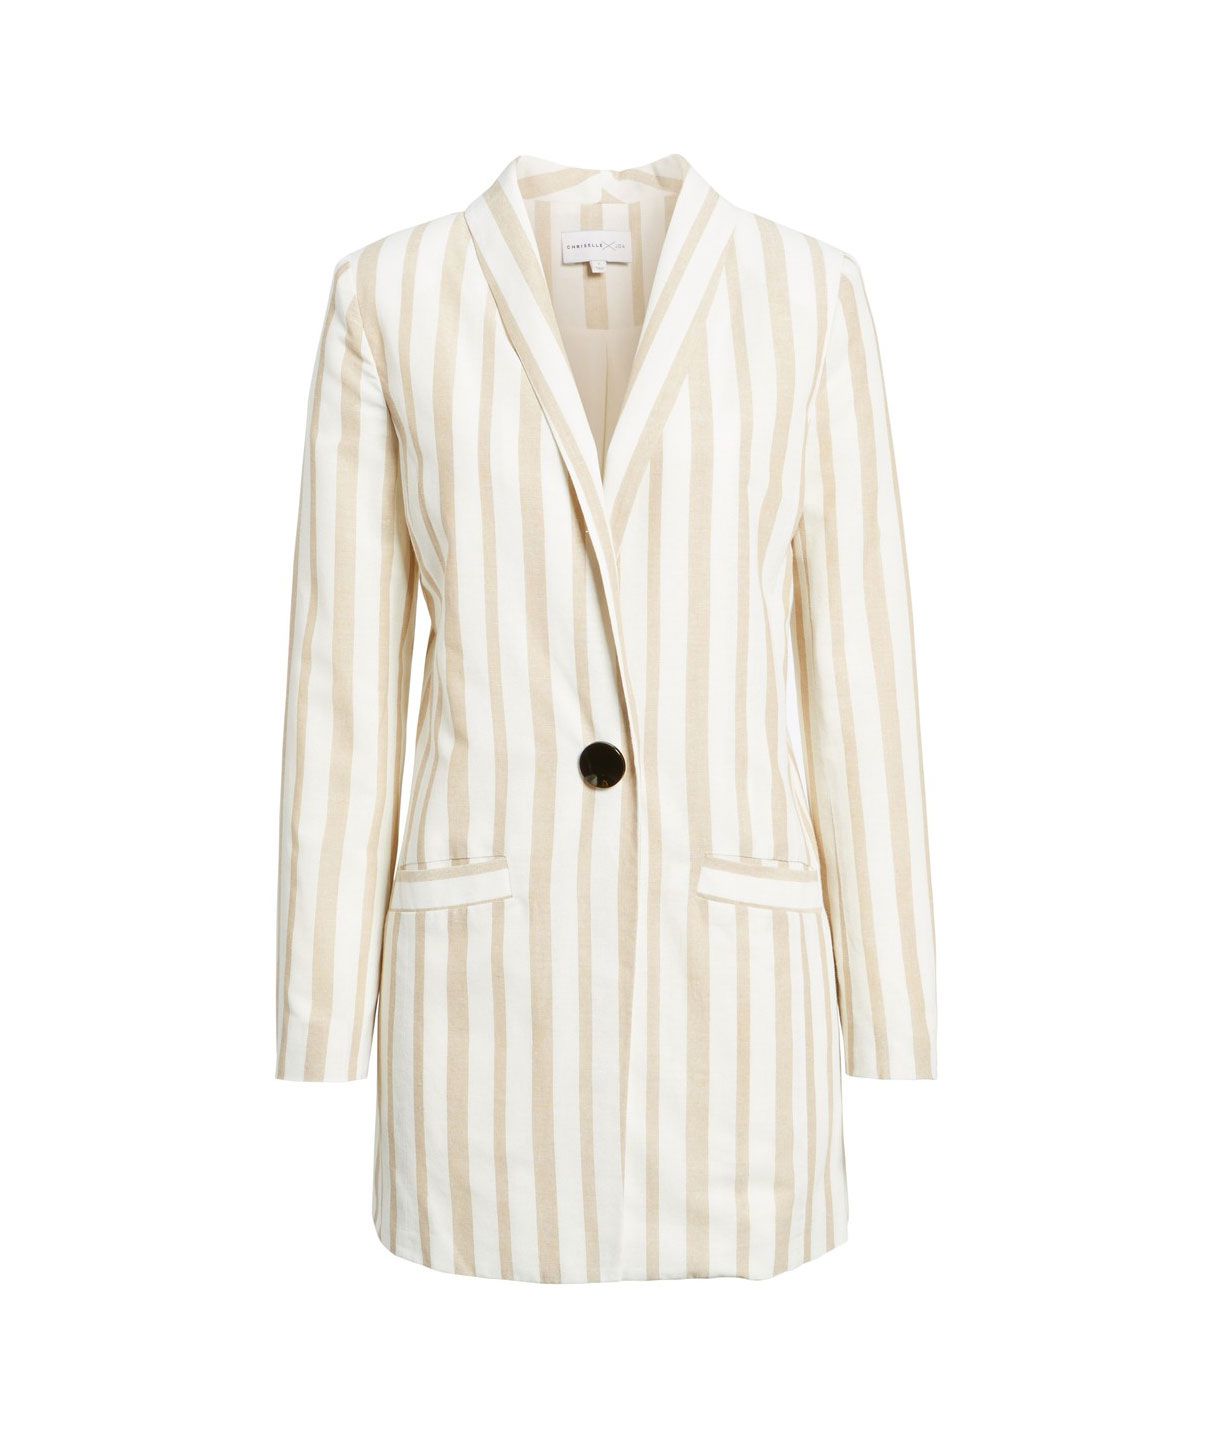 Striped white blazer